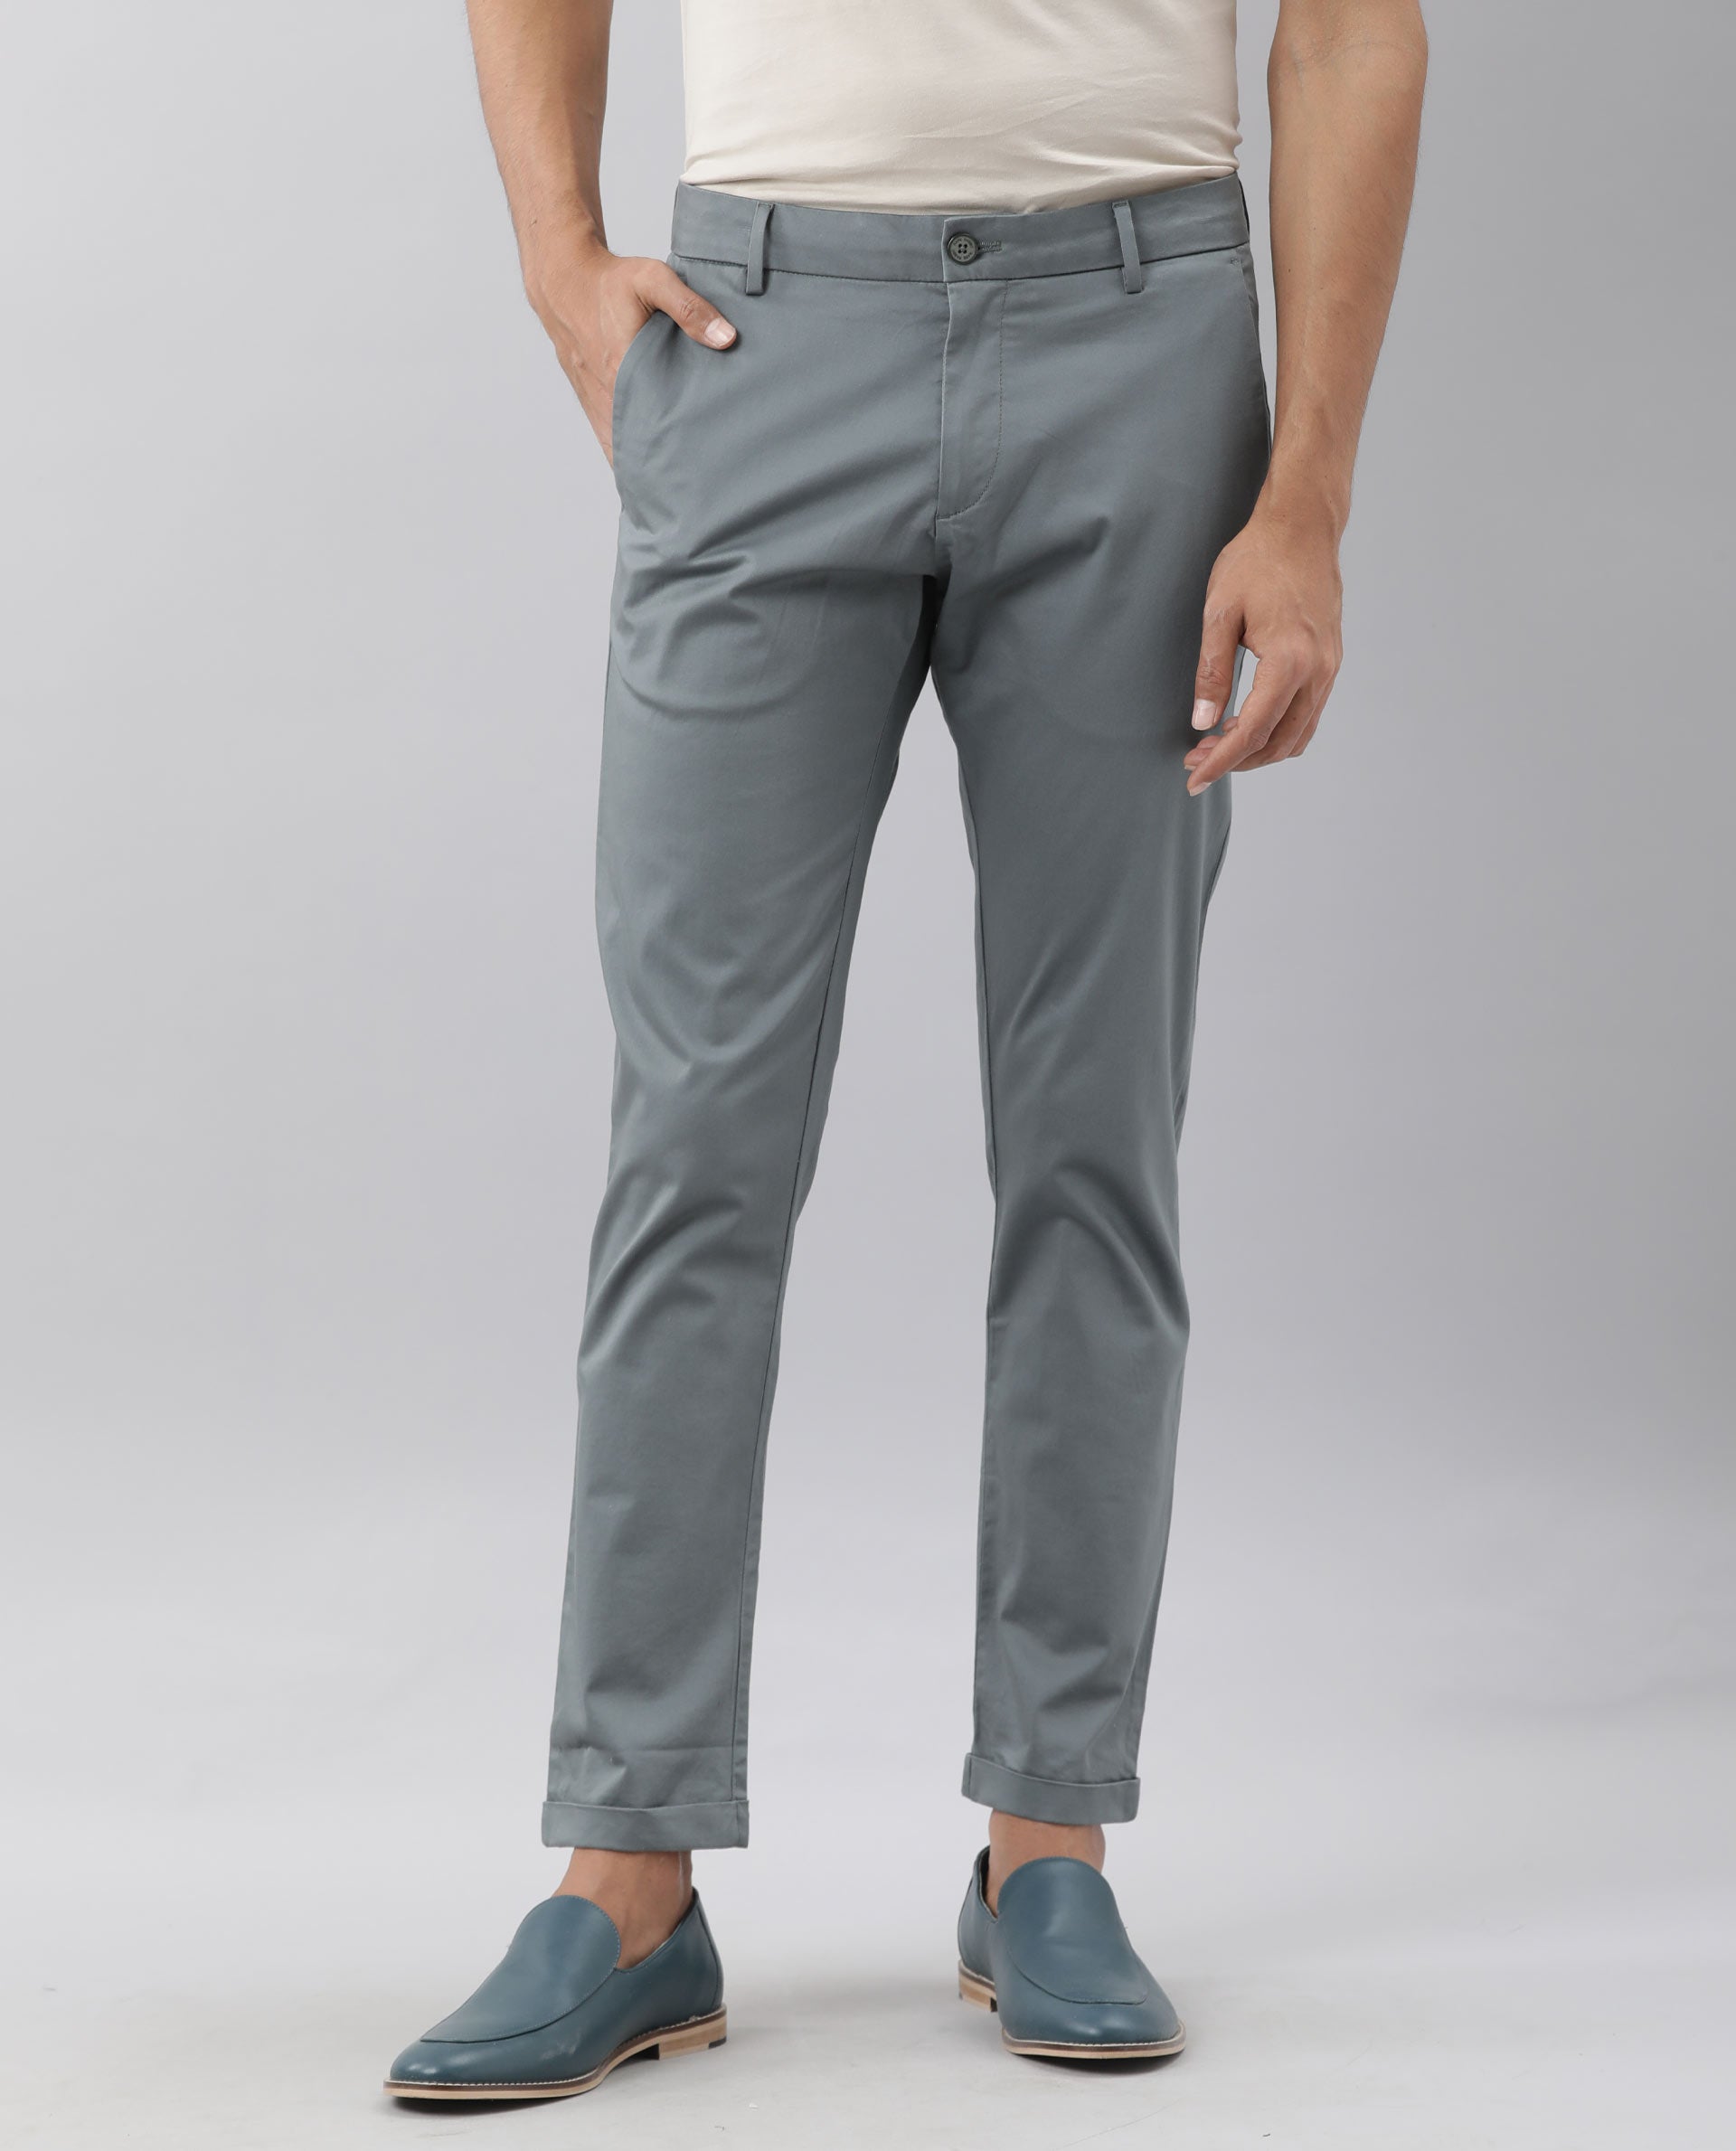 DEYANN Green Color Dupion Silk Trousers for Men - Deyann